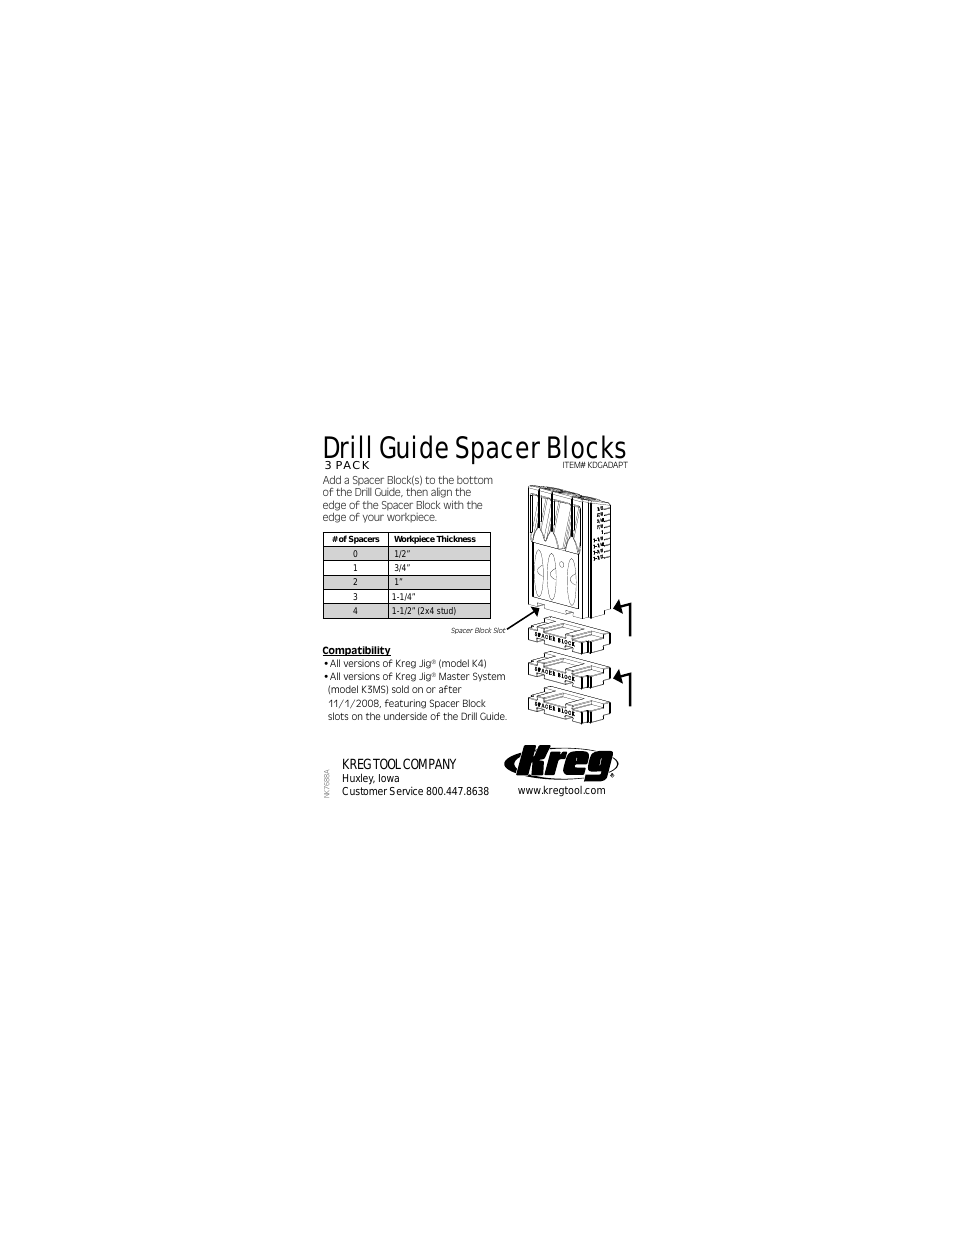 KDGADAPT Drill Guide Spacer Blocks